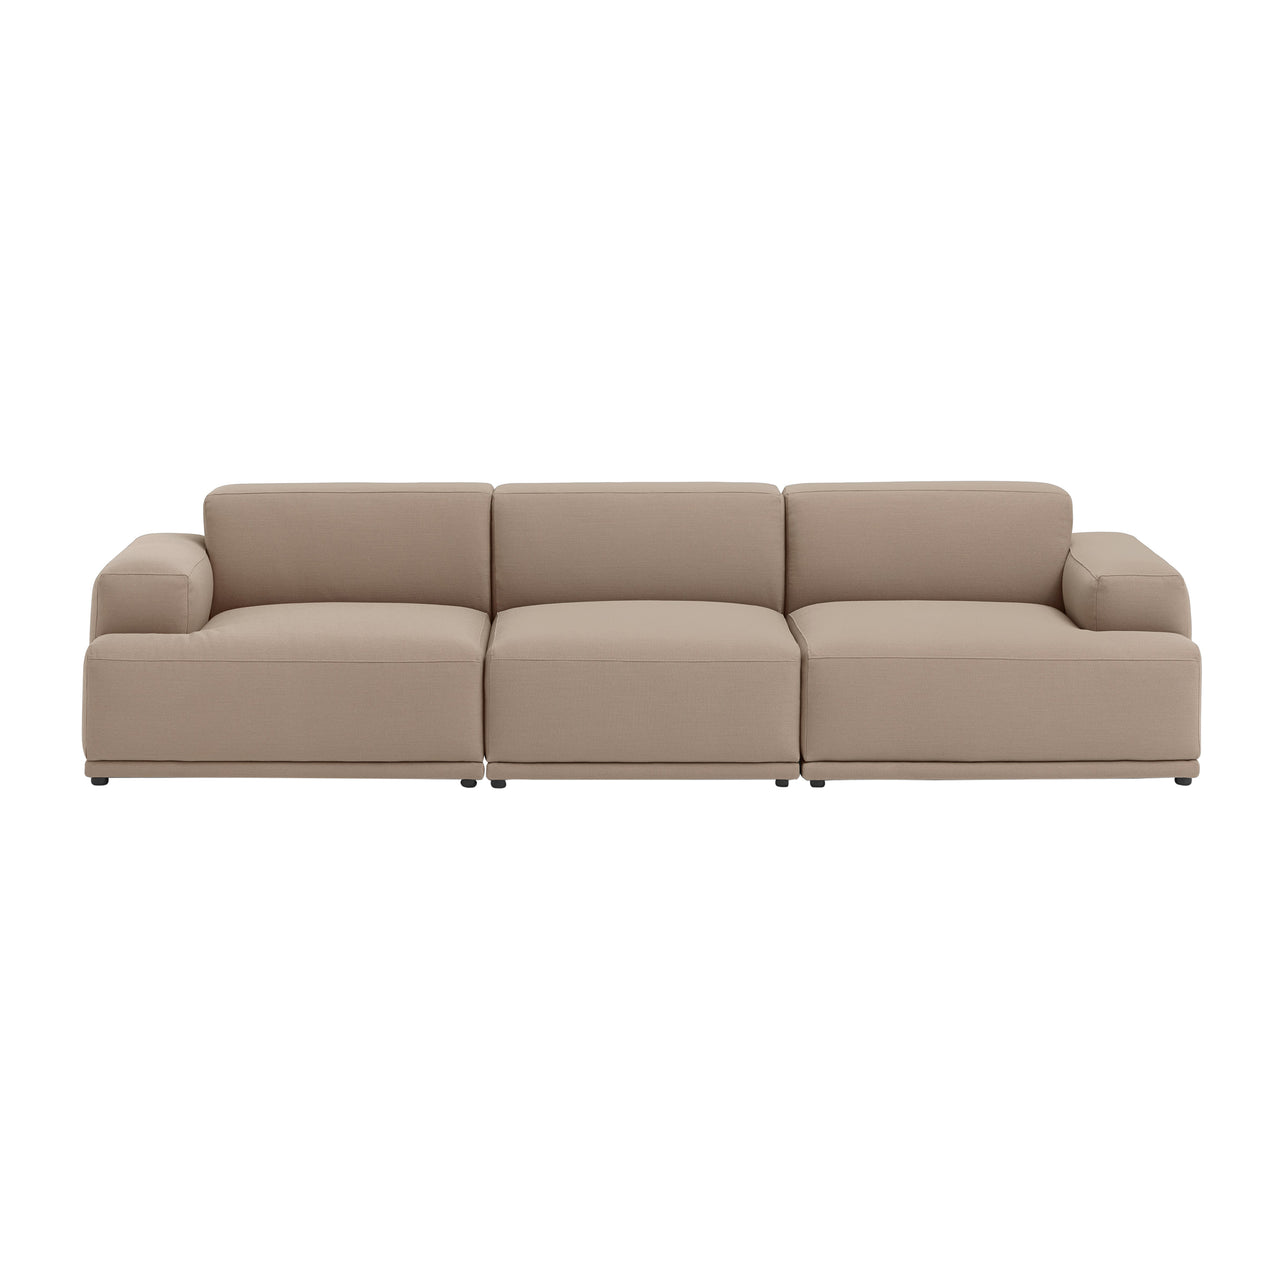 Connect Soft Modular Sofa: 3 Seater + Configuration 1